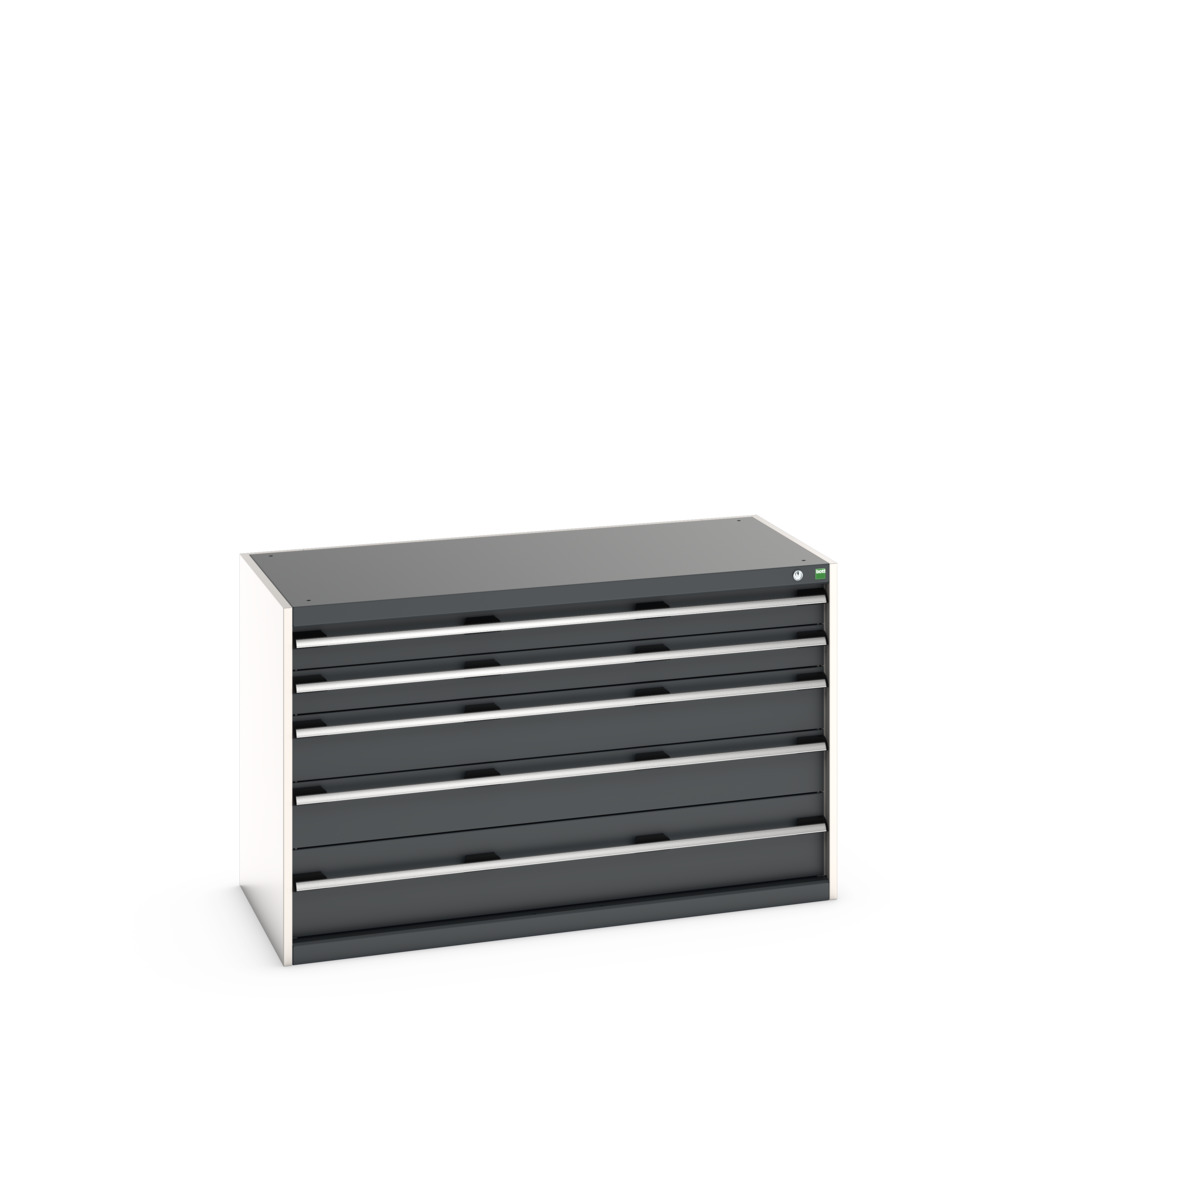 40022108. - cubio drawer cabinet